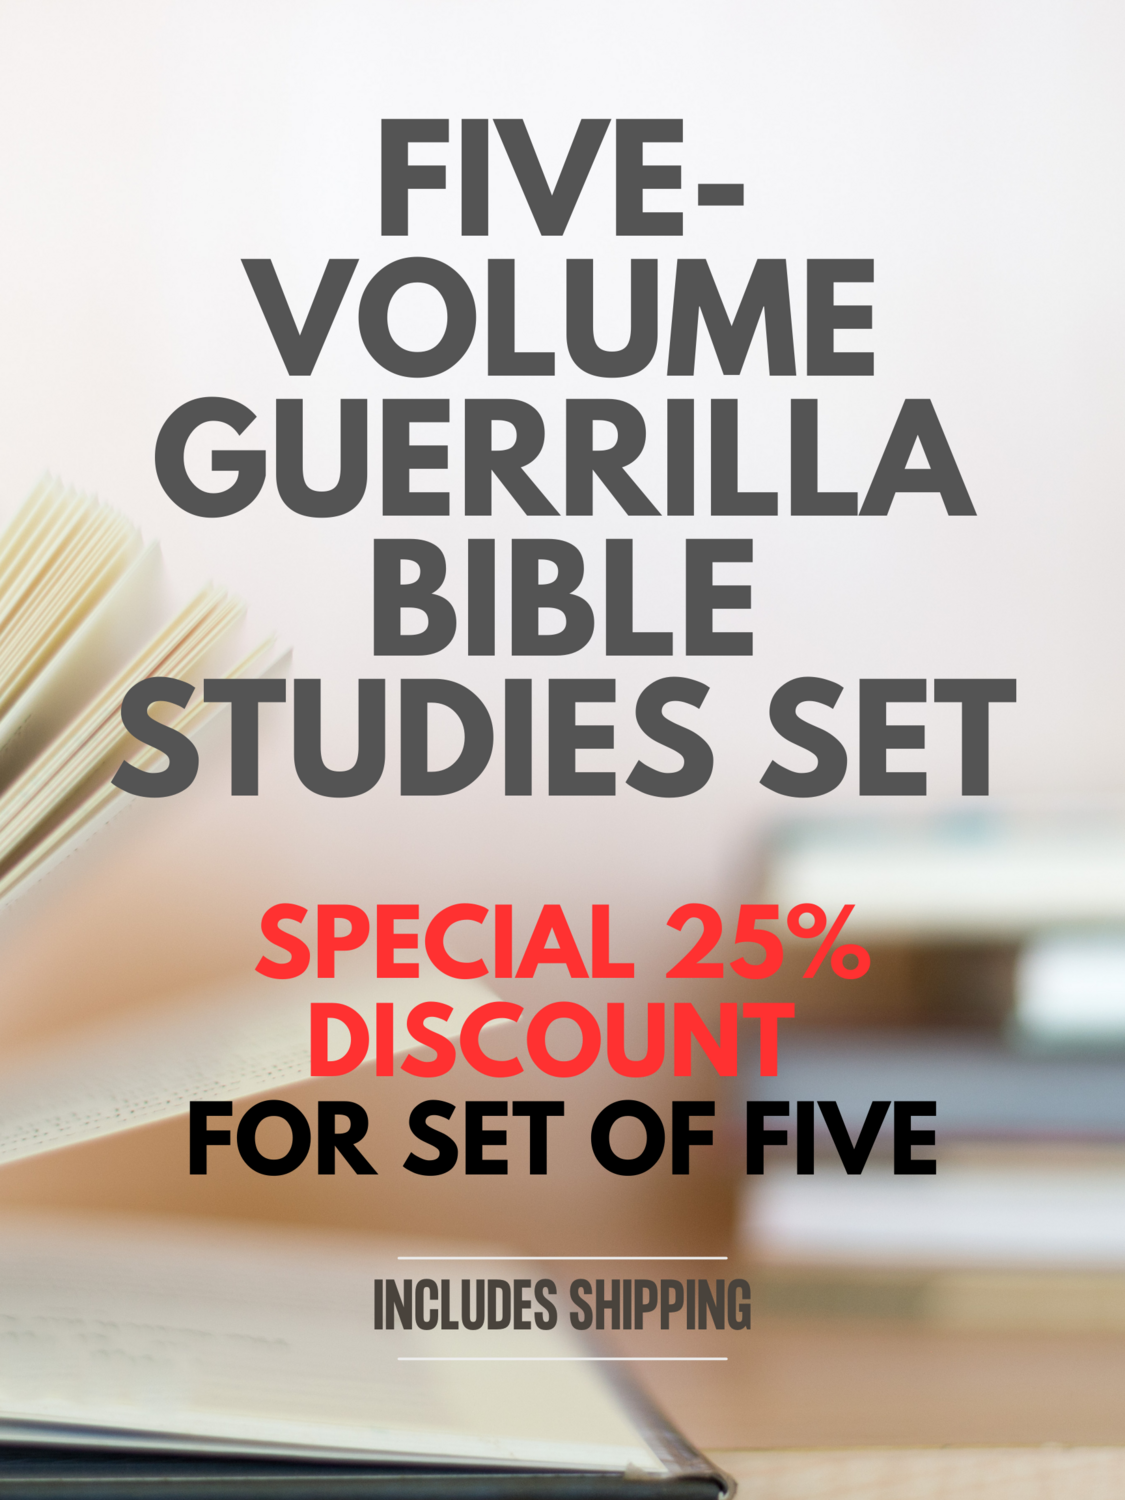 Five-volume Guerrilla Bible Studies set